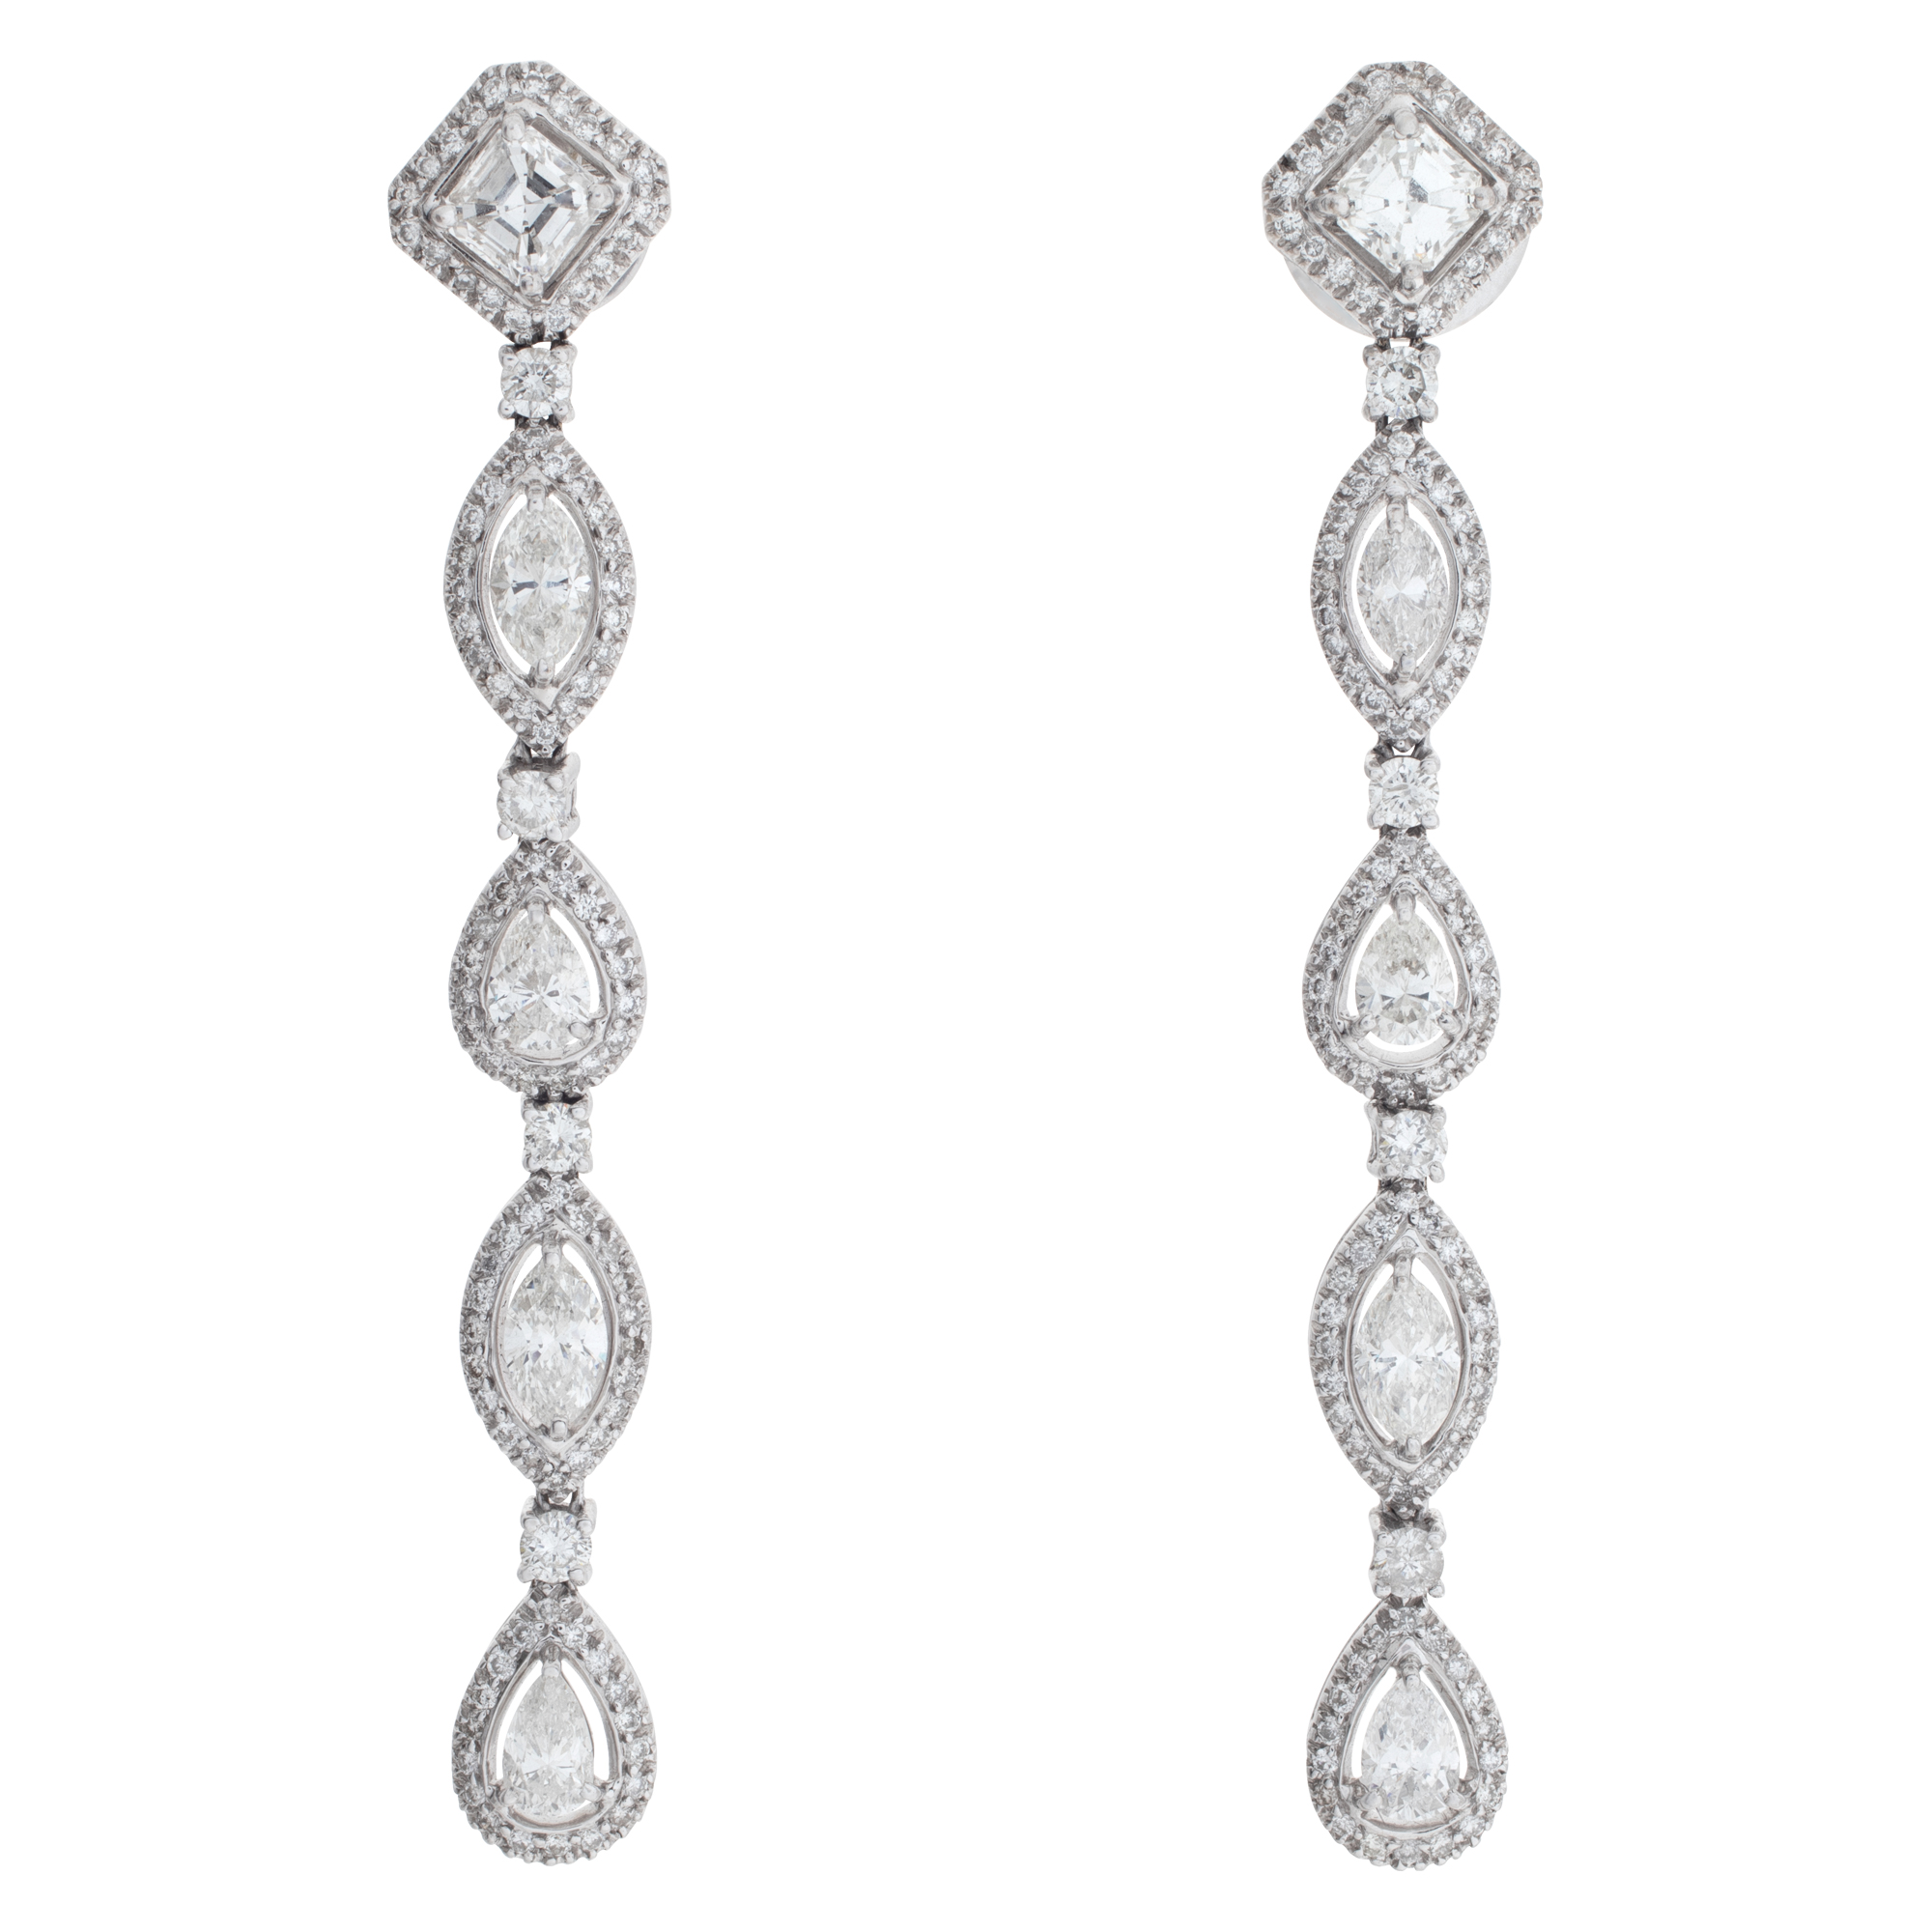 Long diamond earrings in 18k white gold